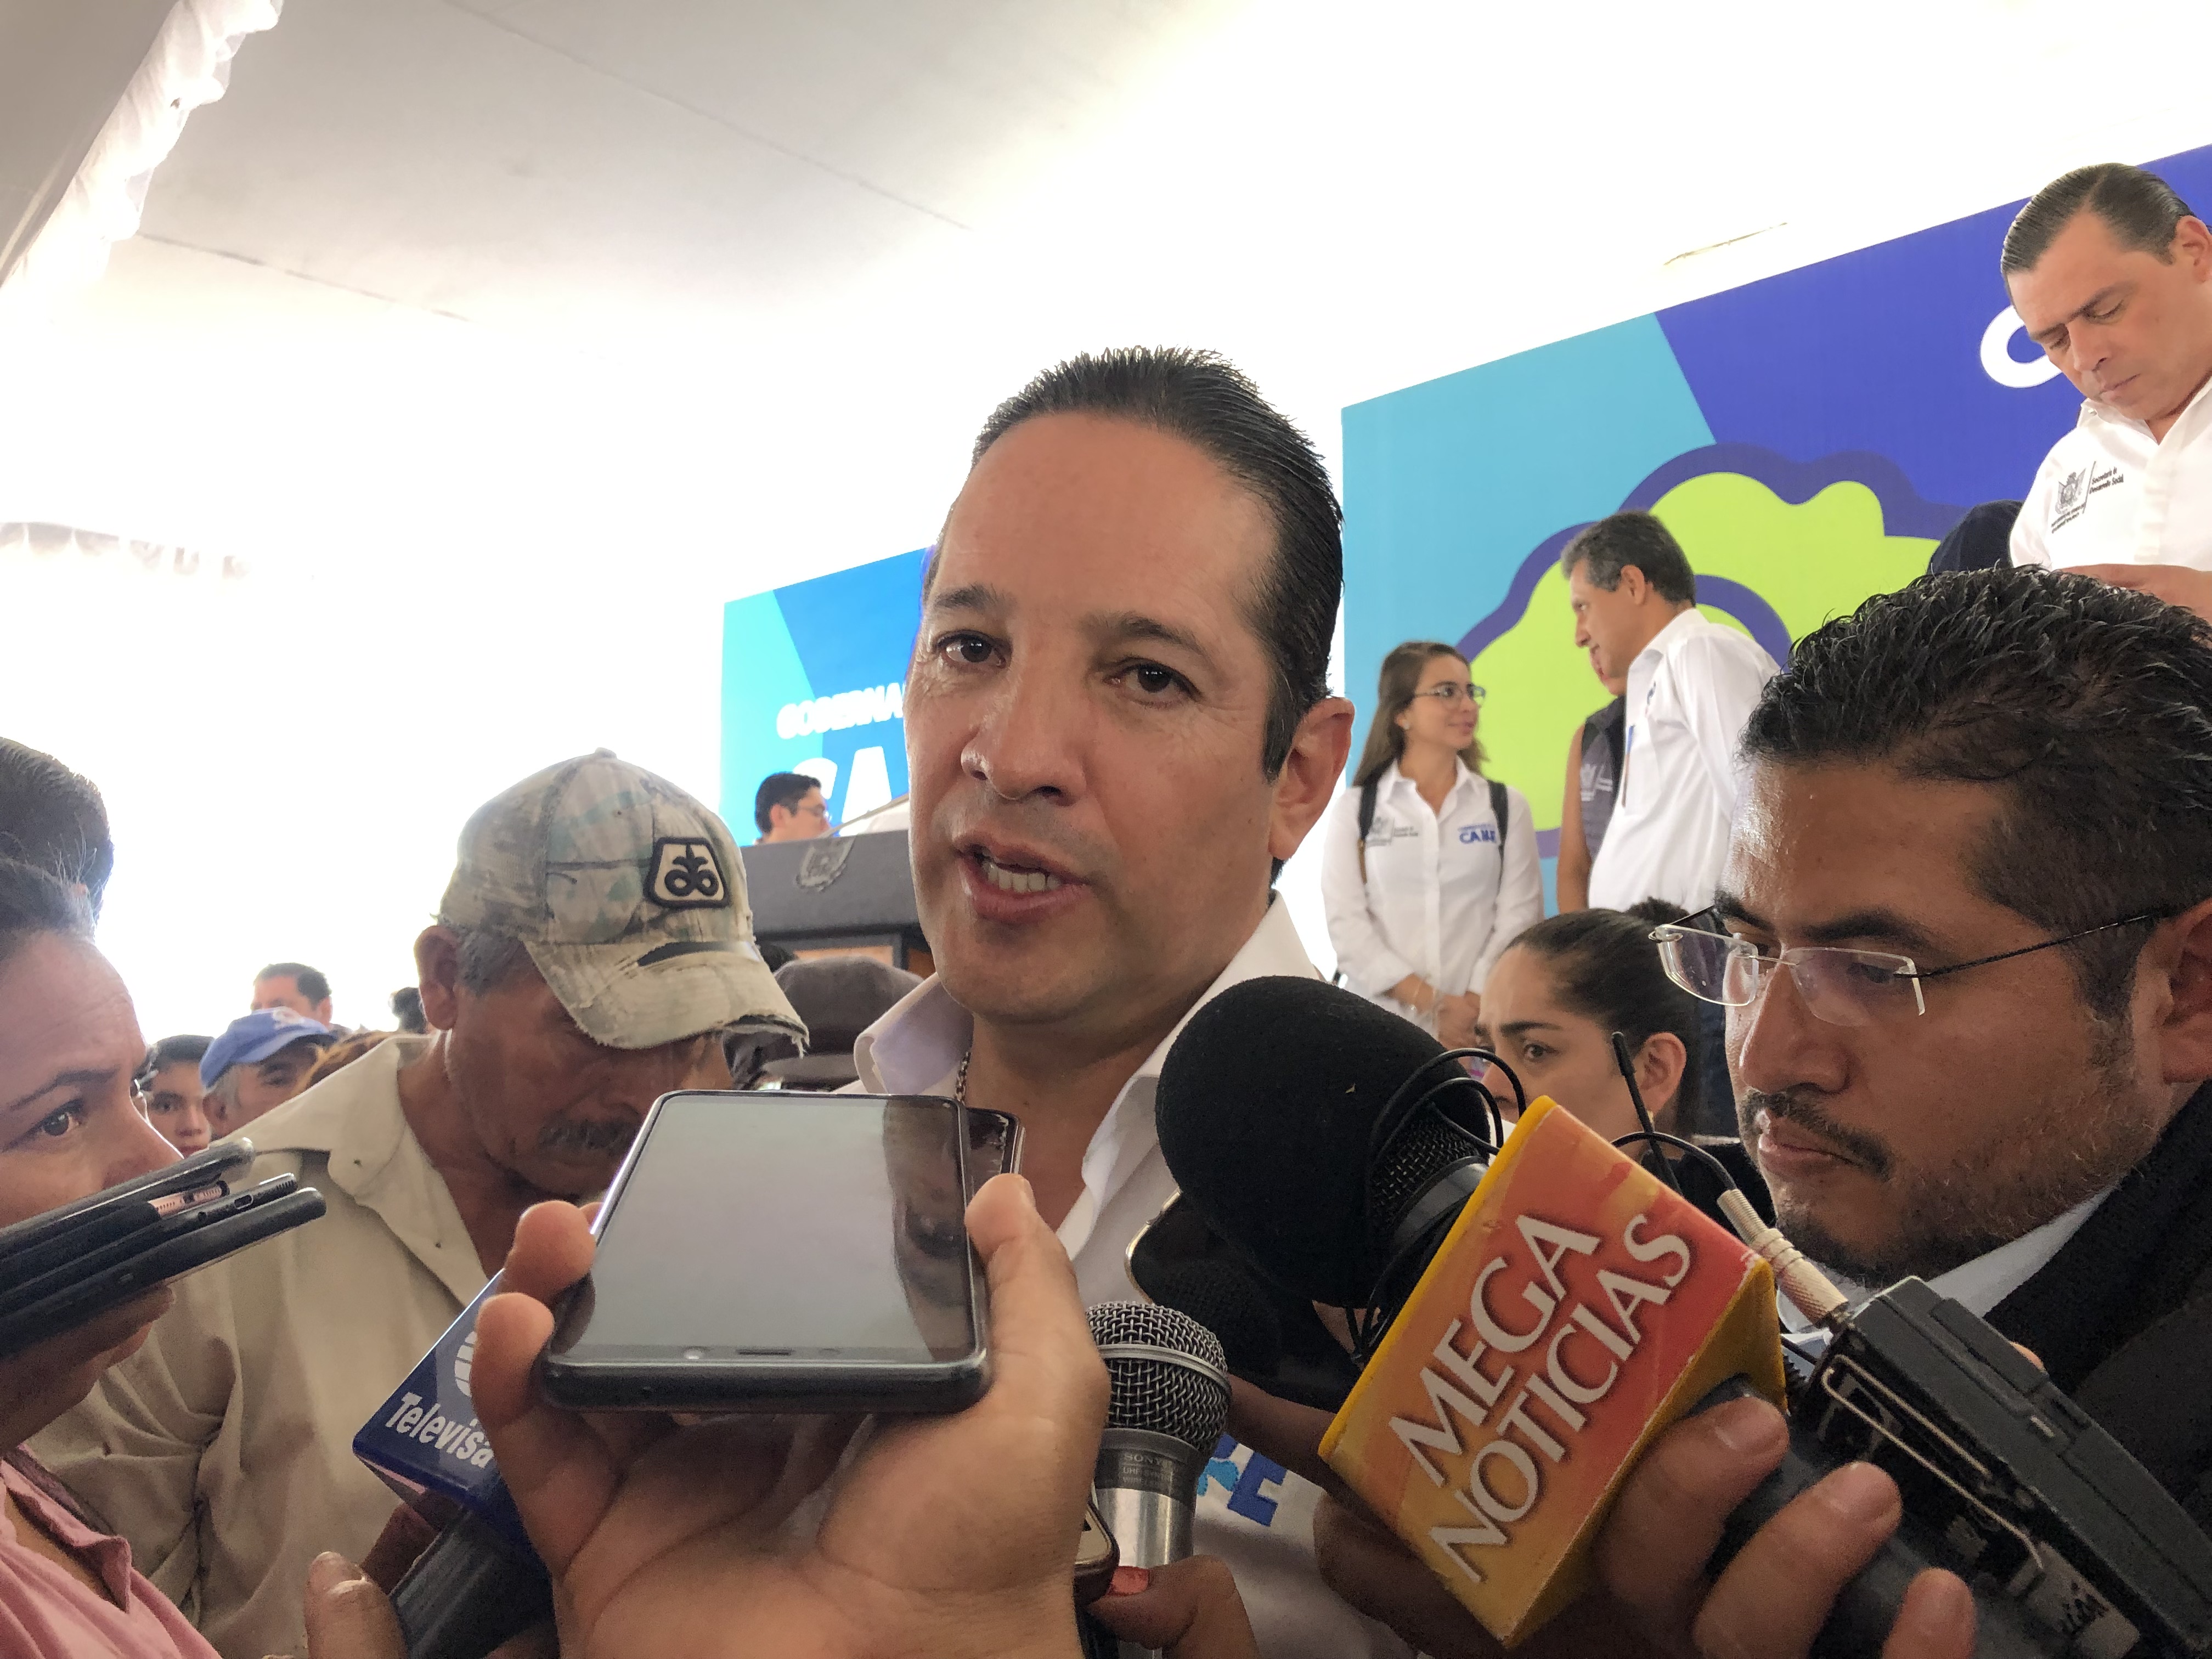  Descarta Pancho Domínguez que AMLO esté detrás de “ataques” en su contra